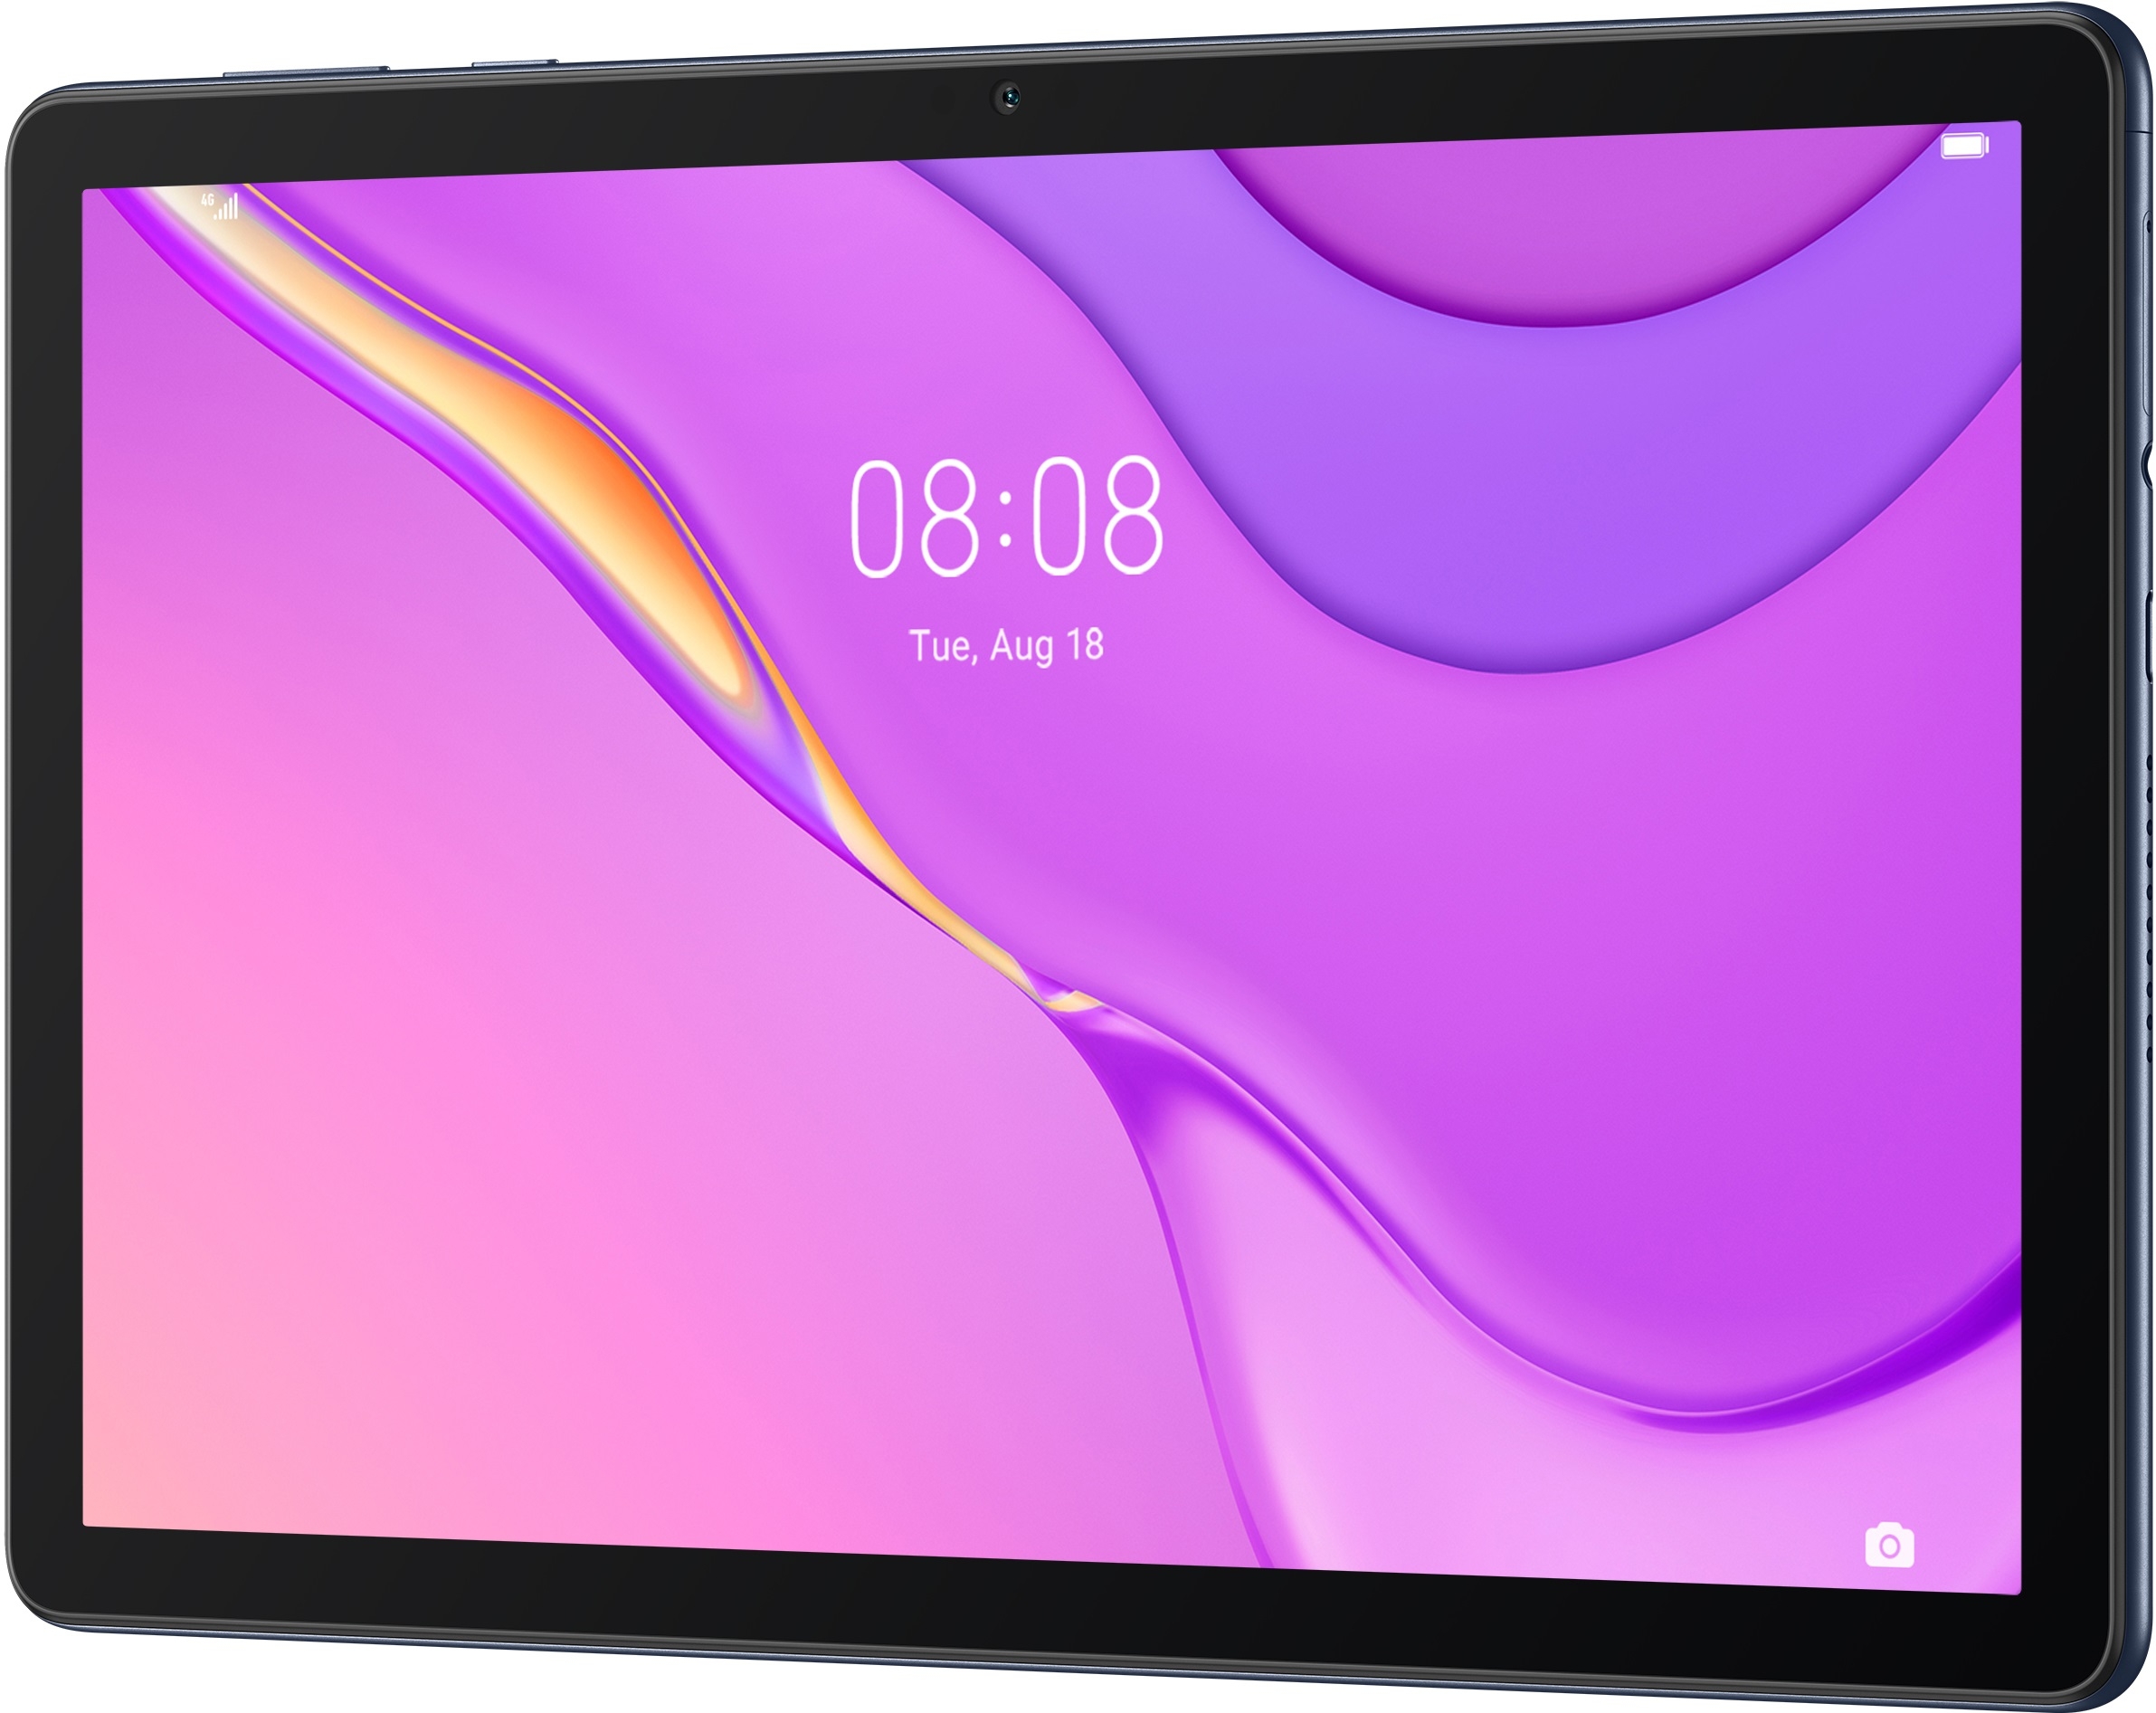 Huawei MatePad T 10s 32Gb LTE (2020)